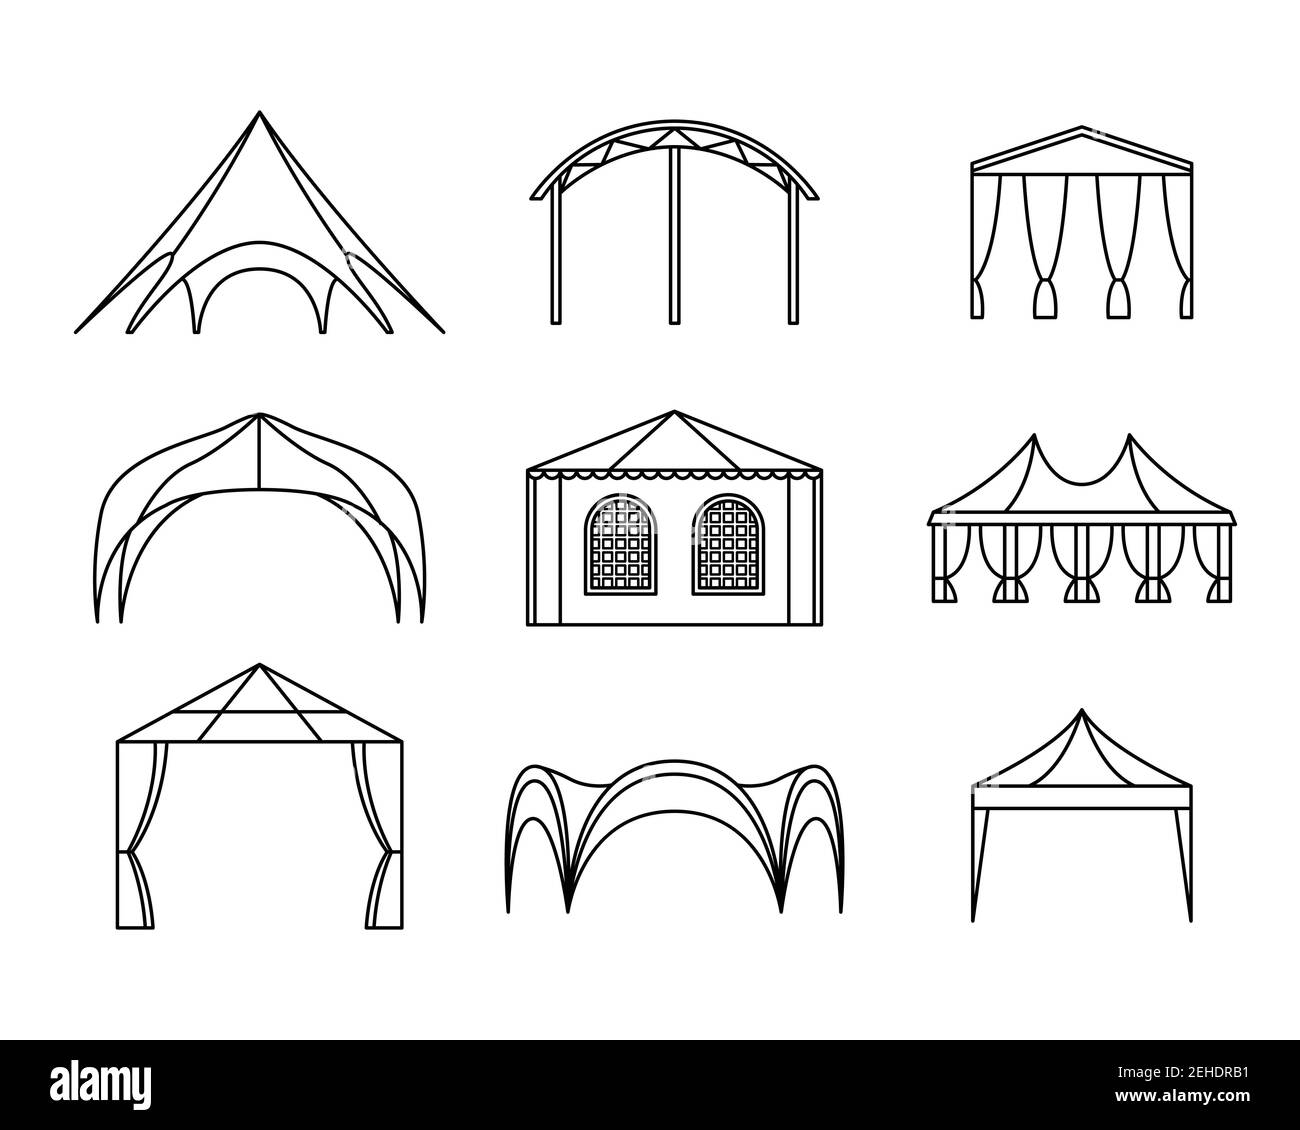 Vektor-Set von Event Zelt Illustrationen. Linienkunst Stock Vektor